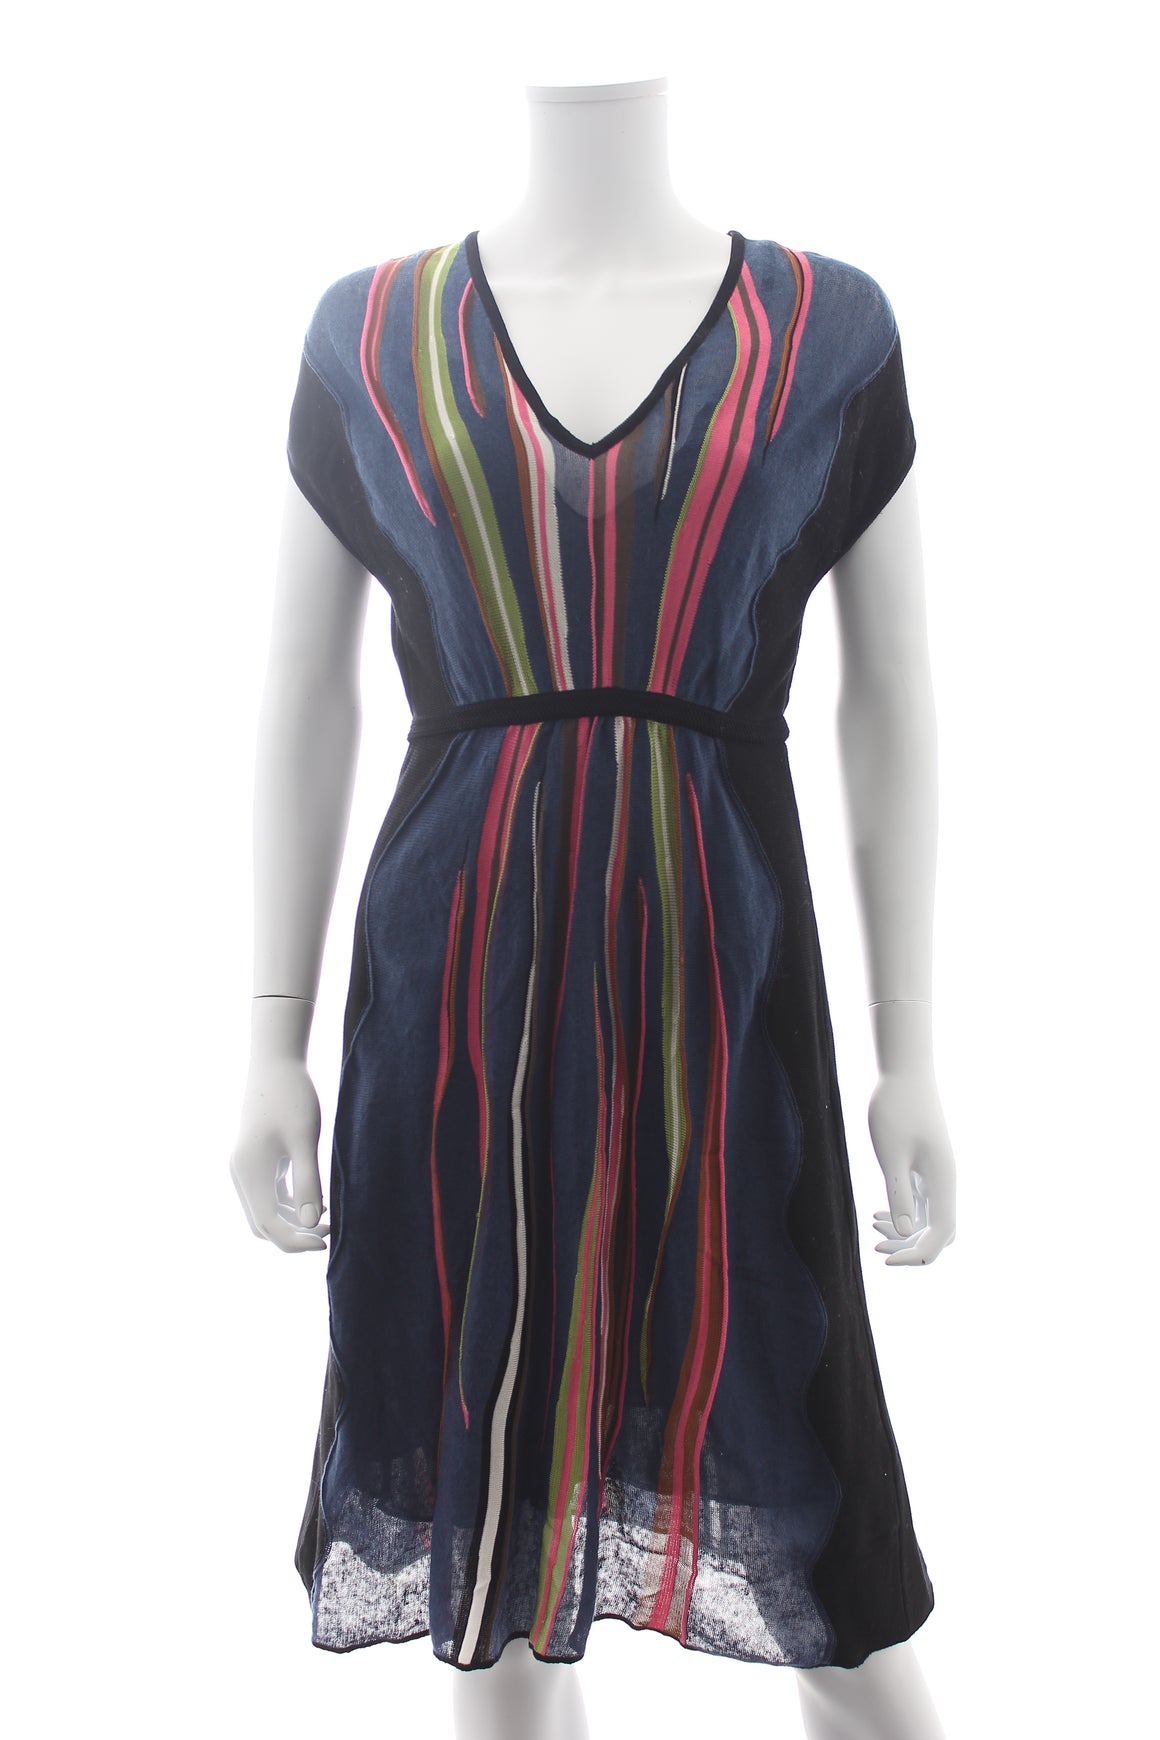 M Missoni Striped Cotton and Linen-Blend Dress